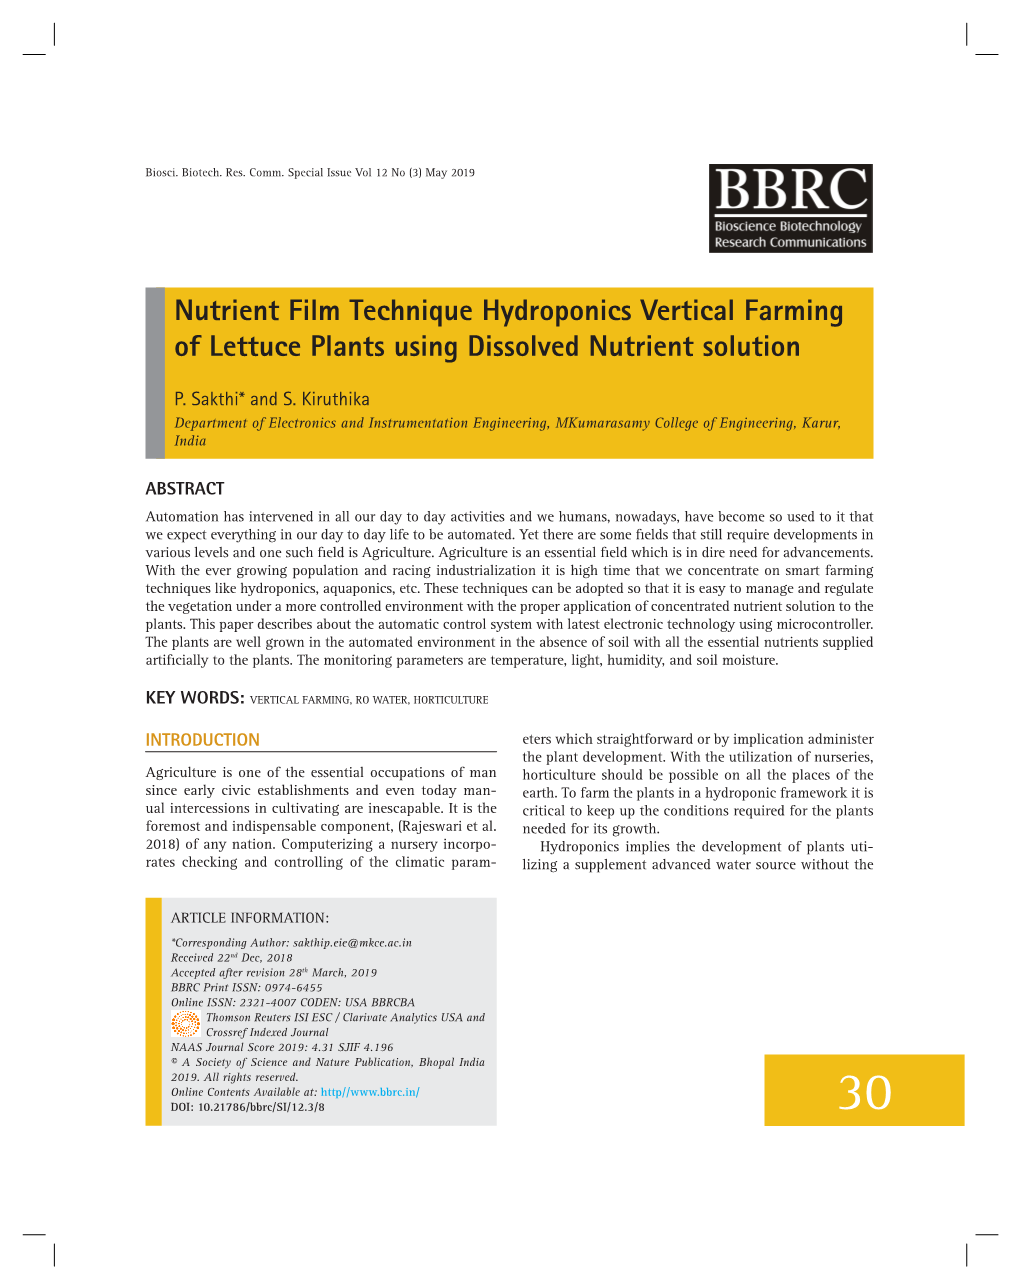 Nutrient Film Technique Hydroponics Vertical Farming of Lettuce Plants Using Dissolved Nutrient Solution